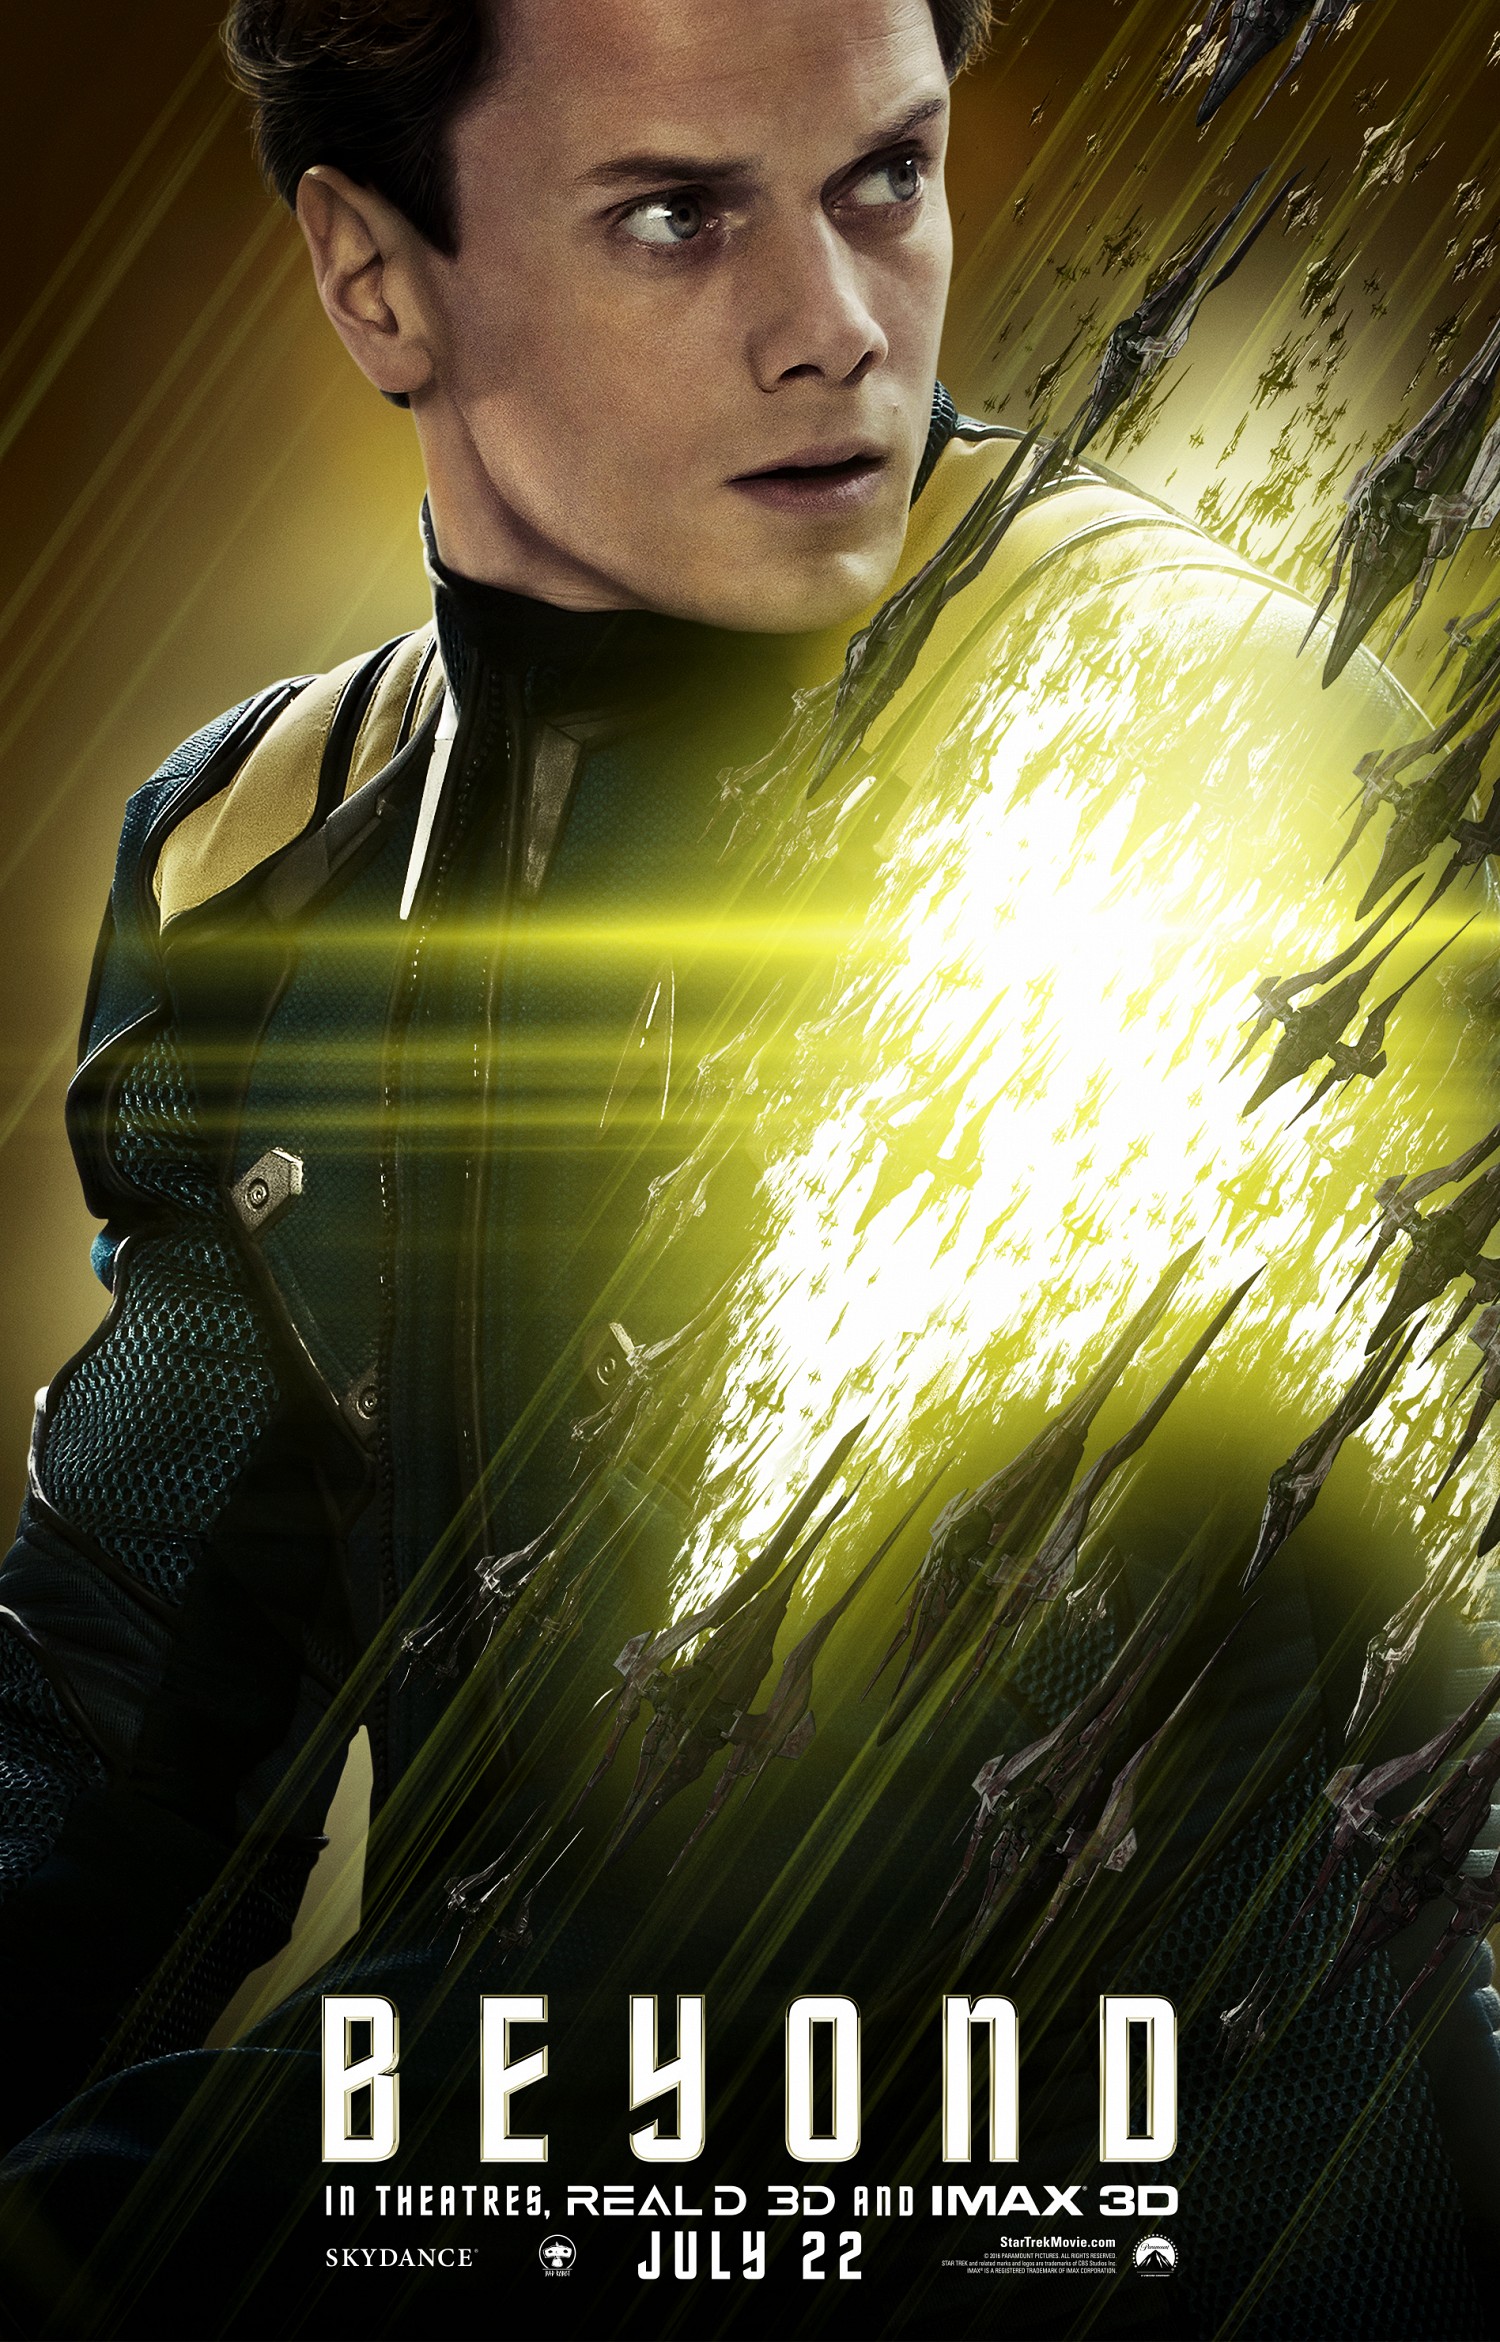 Anton Yelchin as 'Chekov' in 'Star Trek Beyond'